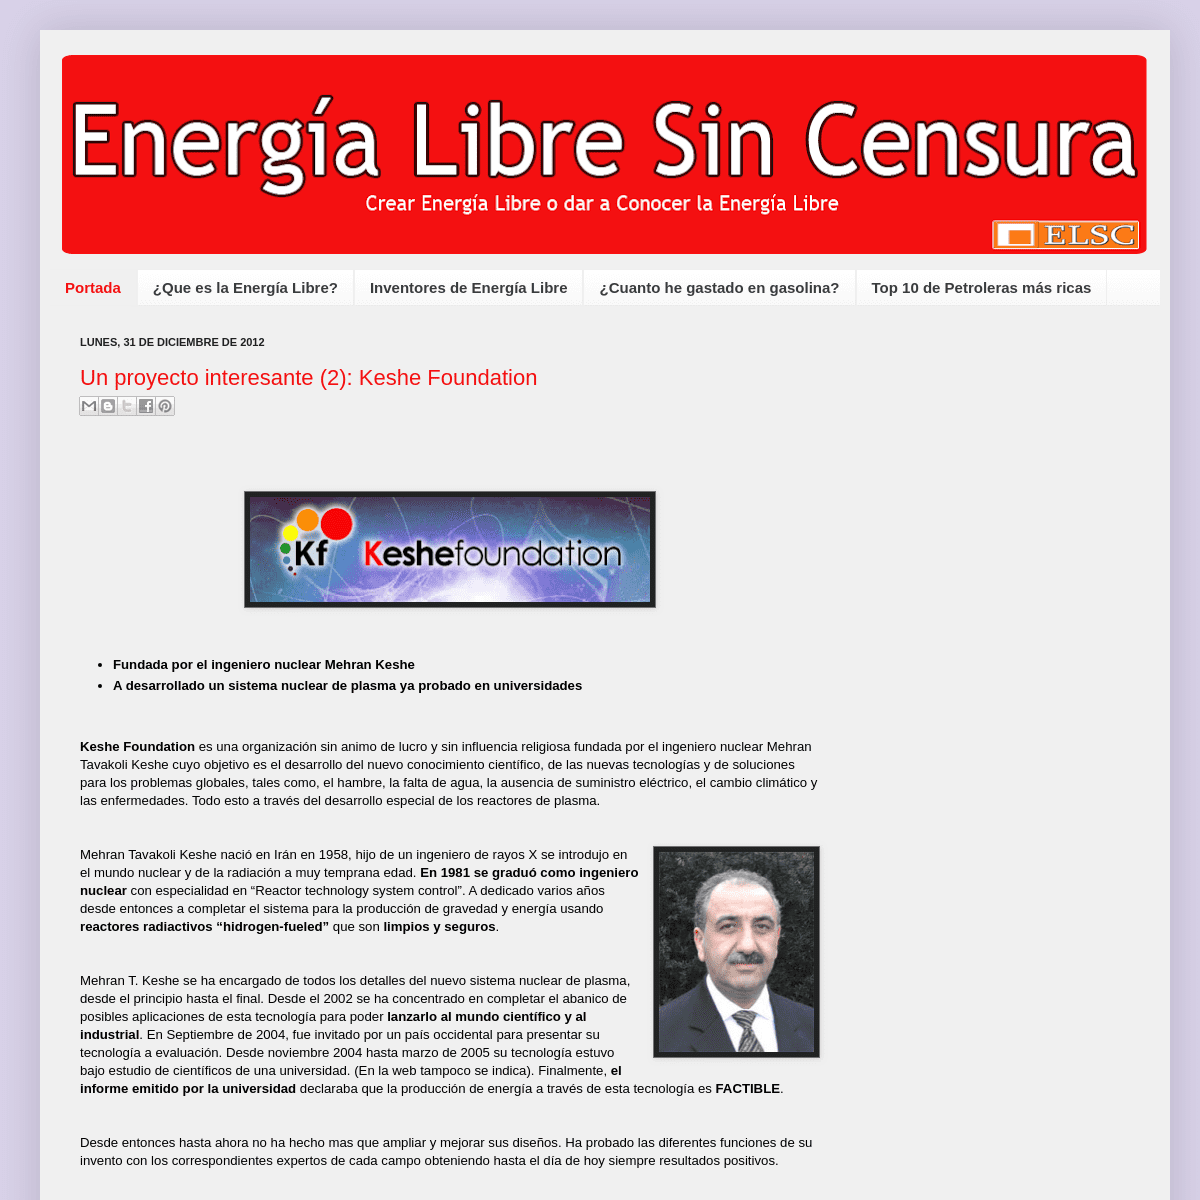 A complete backup of energialibresincensura.blogspot.com